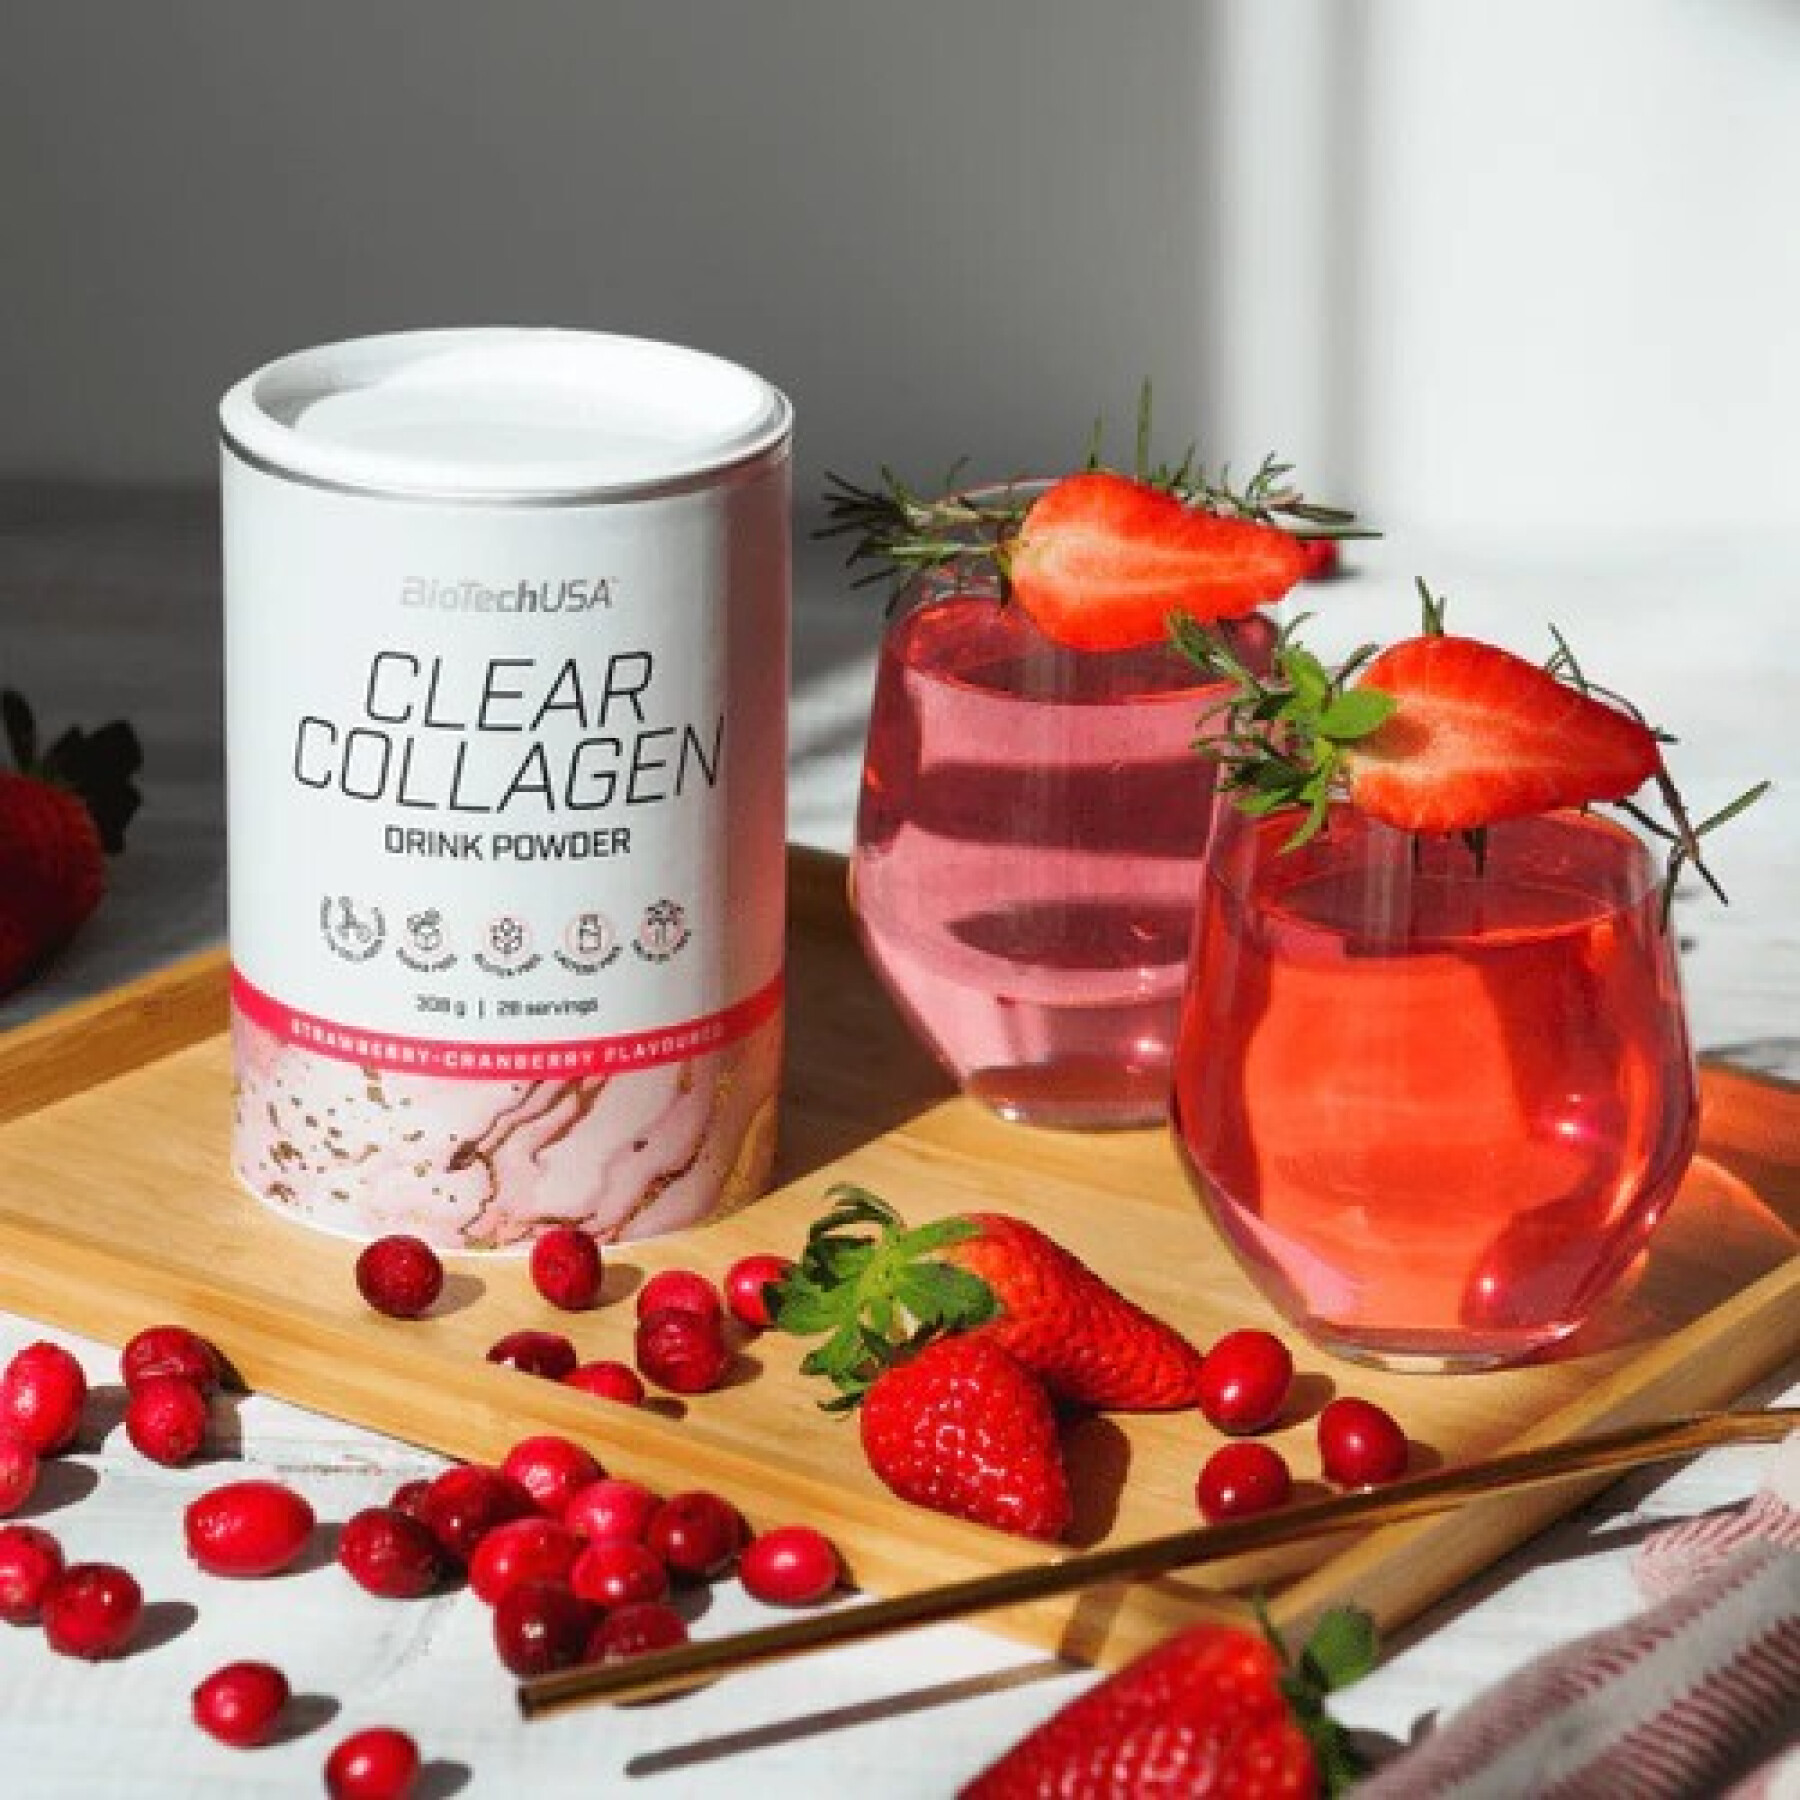 Kollagen - Erdbeer-Cranberry Biotech USA Clear